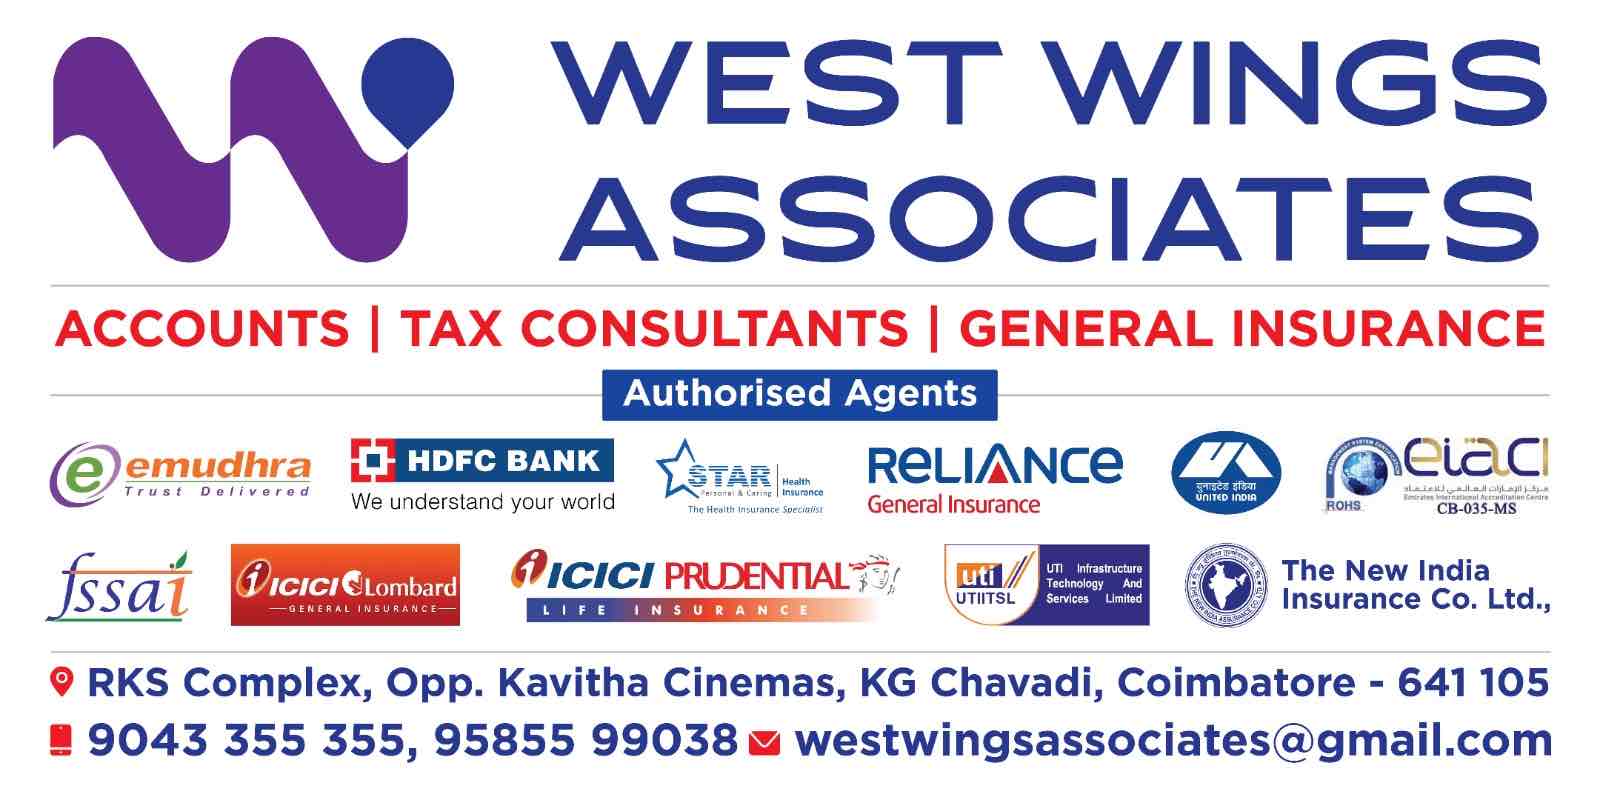 WestWings Associates